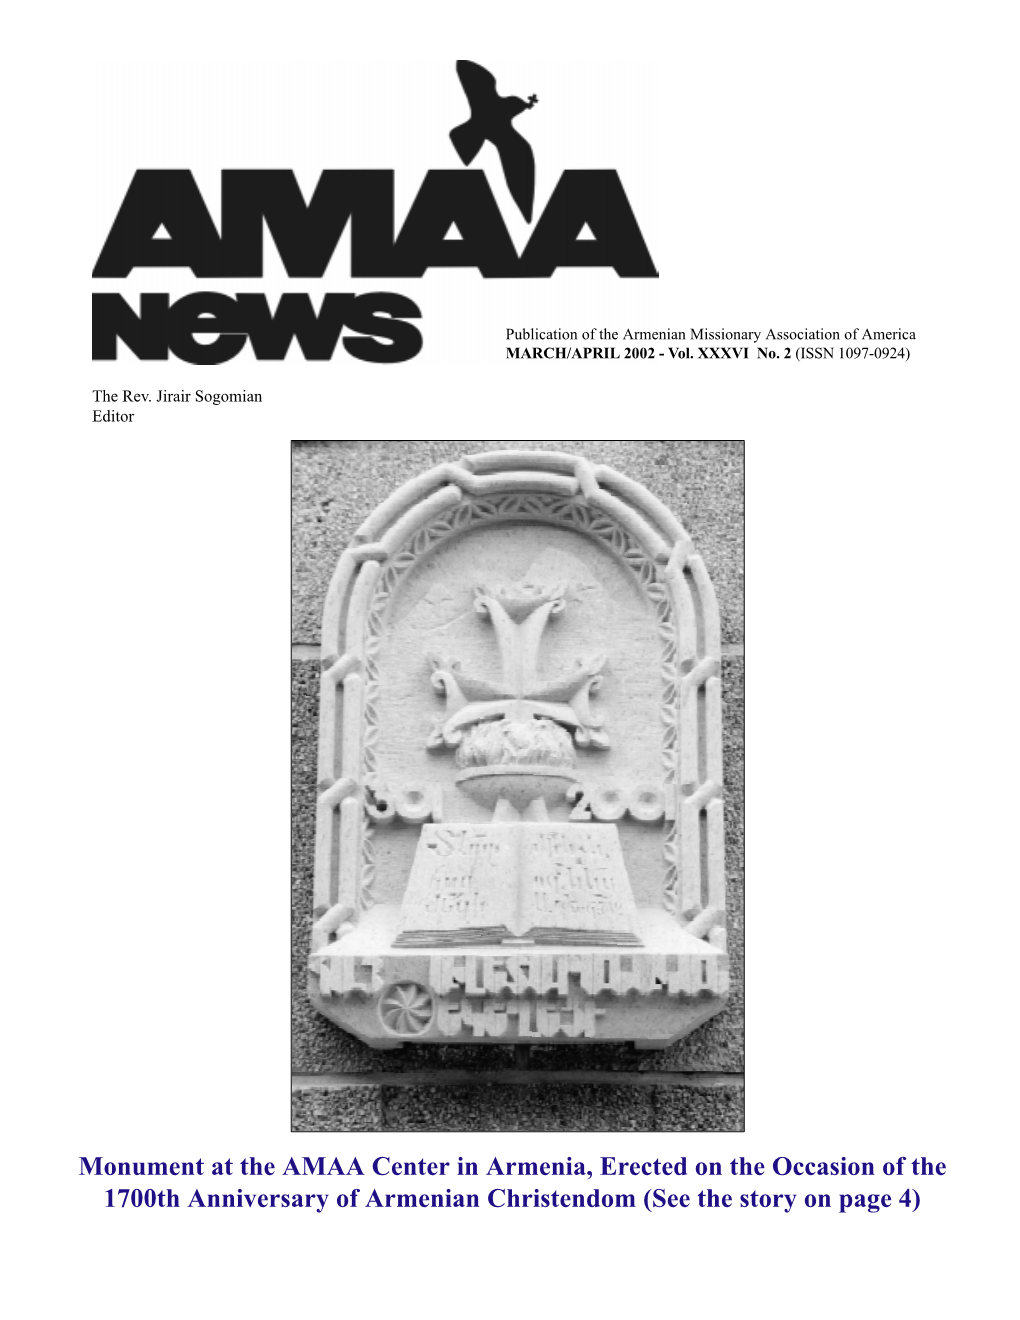 AMAA NEWS March-April 2002